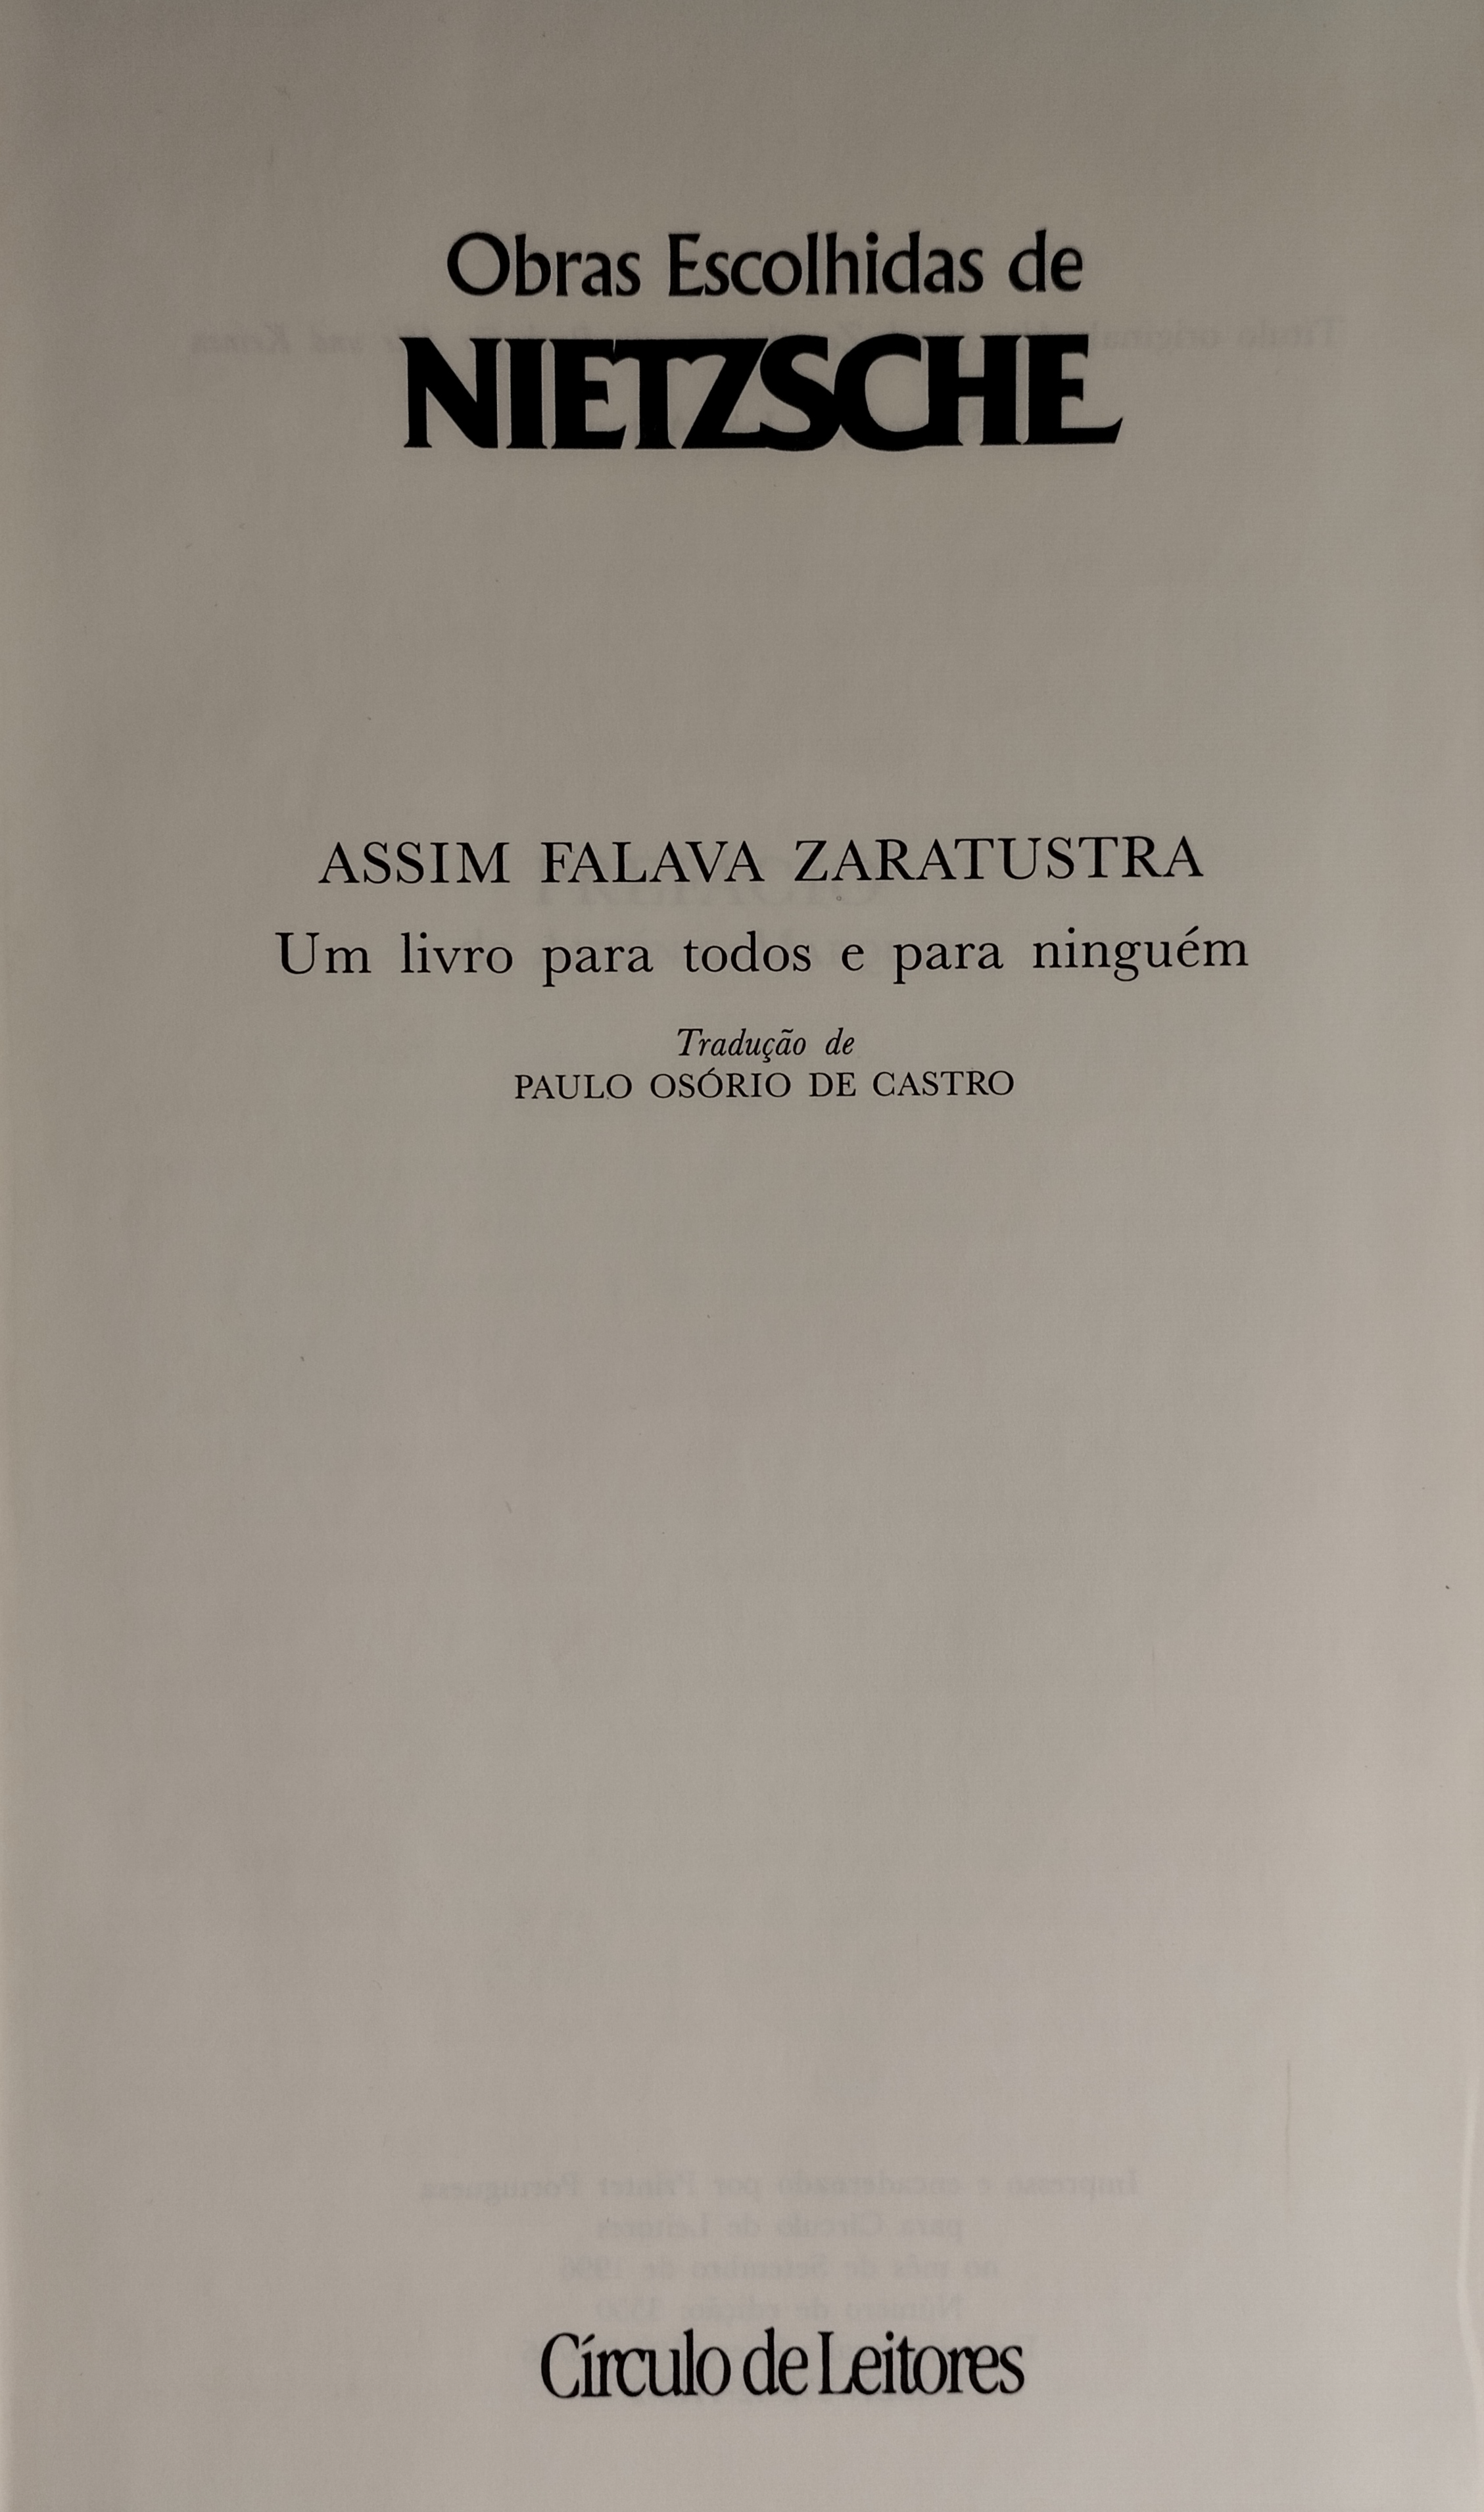 Assim Falava Zaratustra